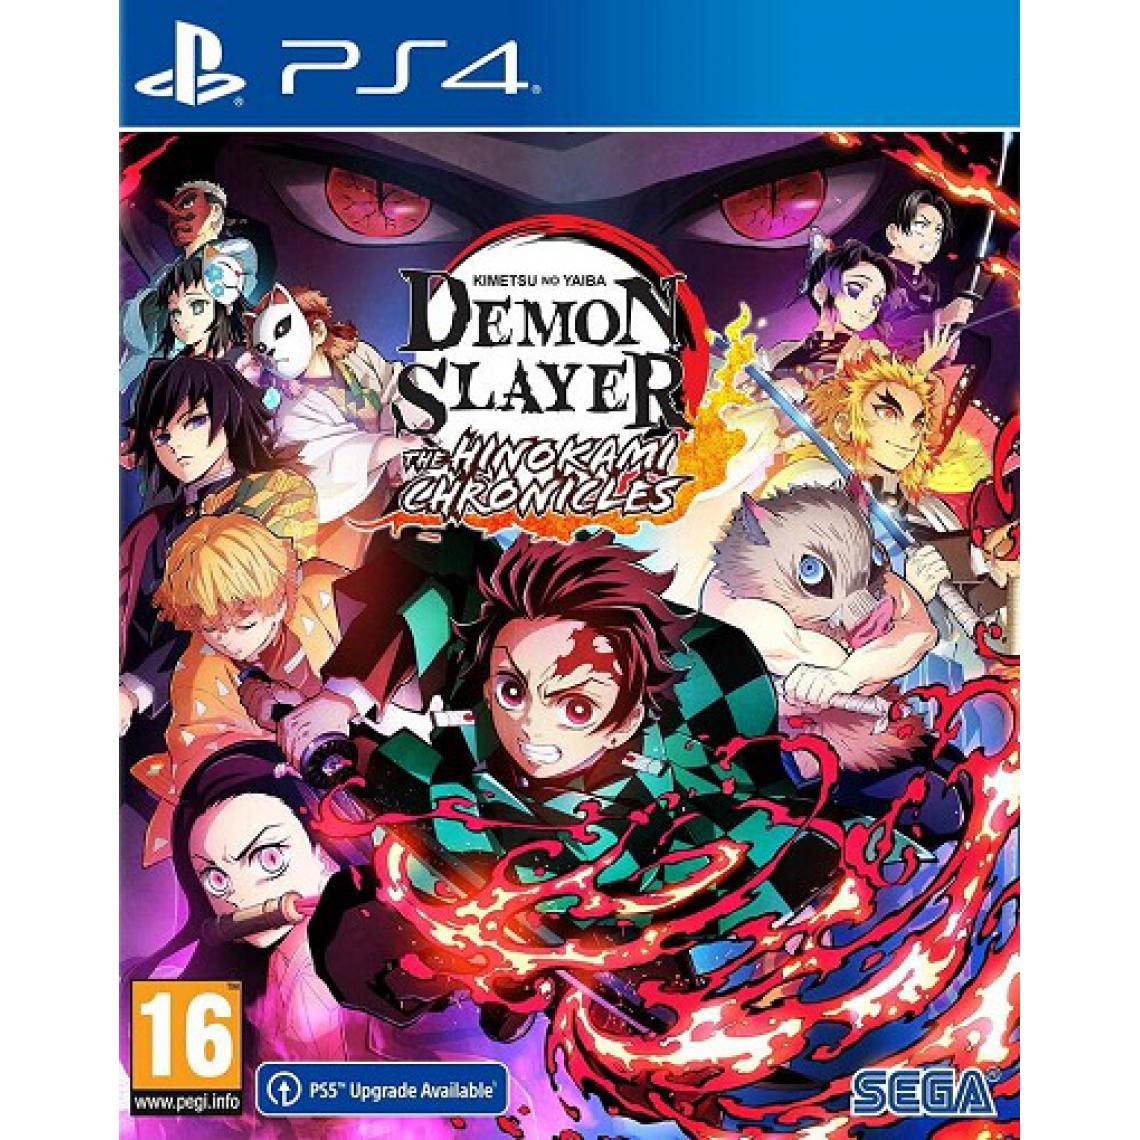 Sega - Demon Slayer : Kimetsu no Yaiba - The Hinokami Chronicles Jeu PS4 (Mise a niveau PS5 disponible) - Jeux PS4